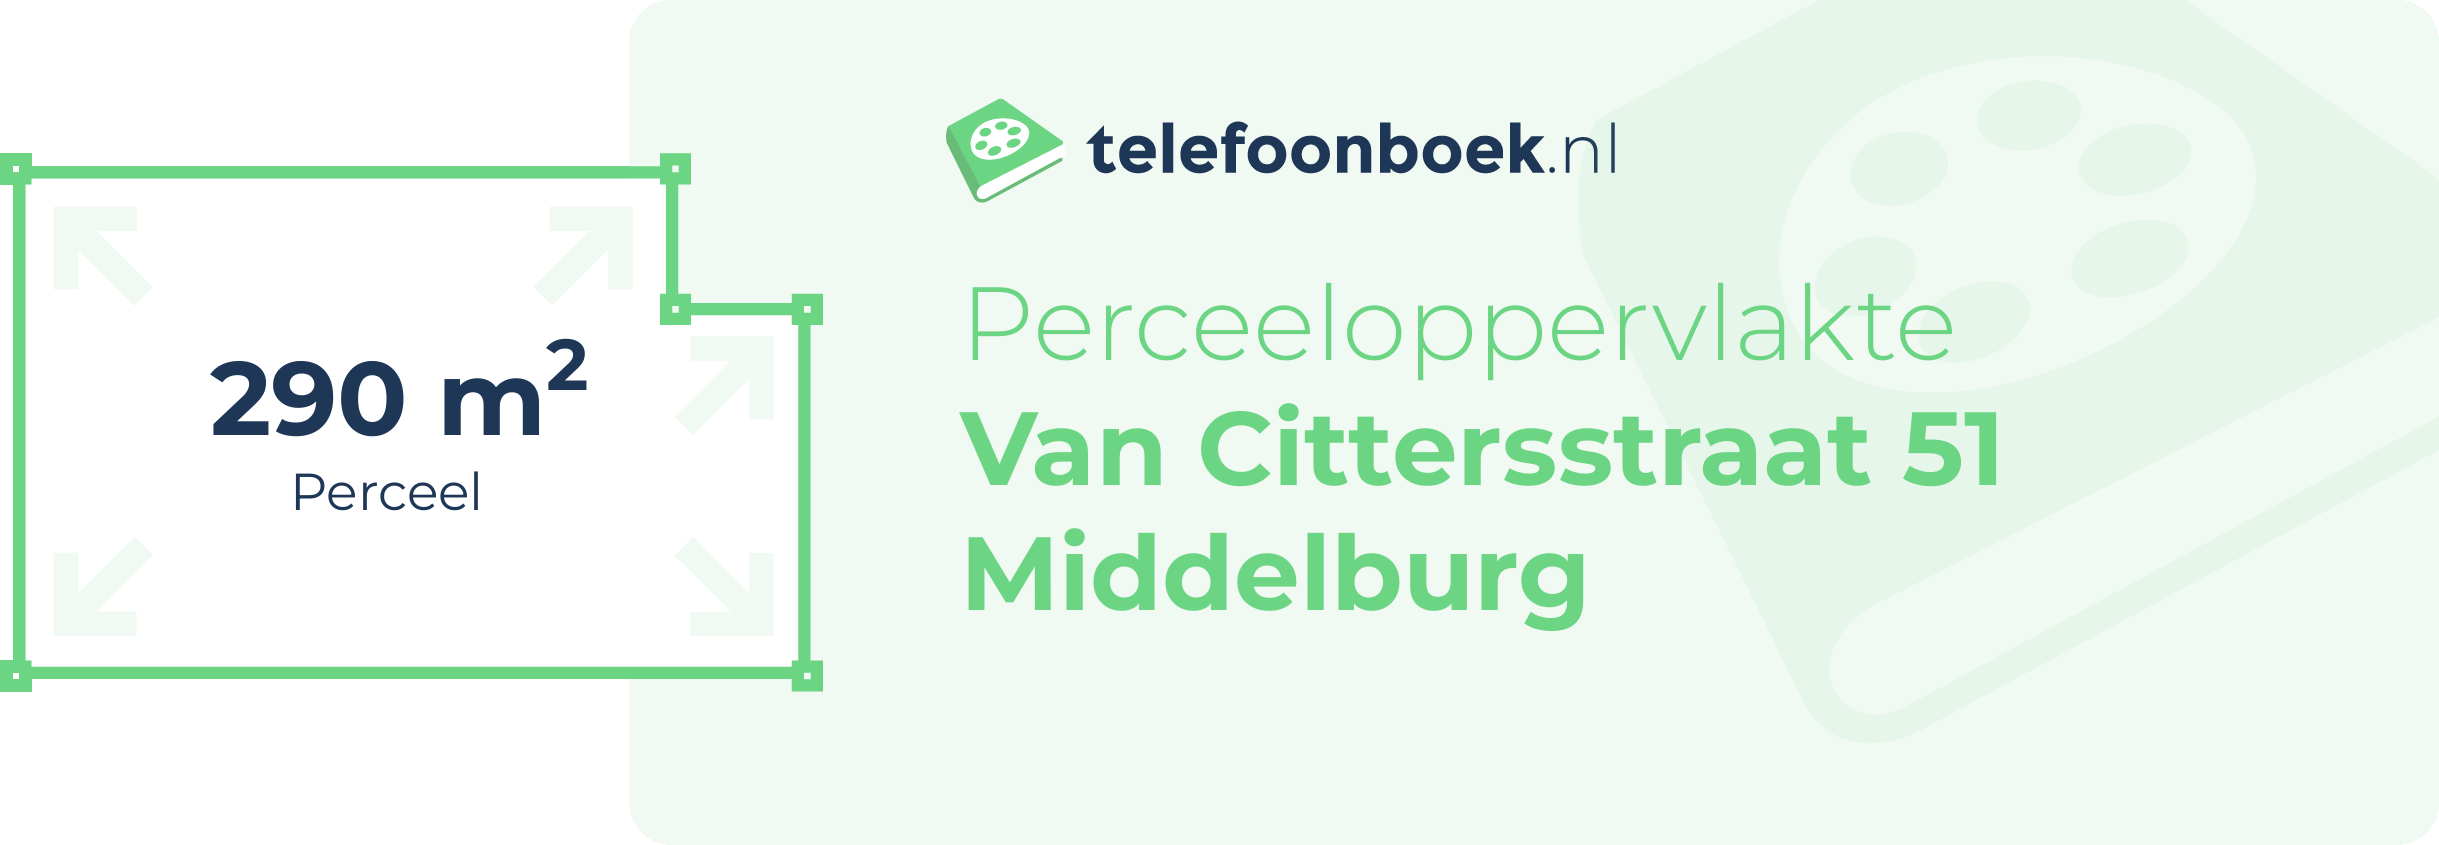 Perceeloppervlakte Van Cittersstraat 51 Middelburg